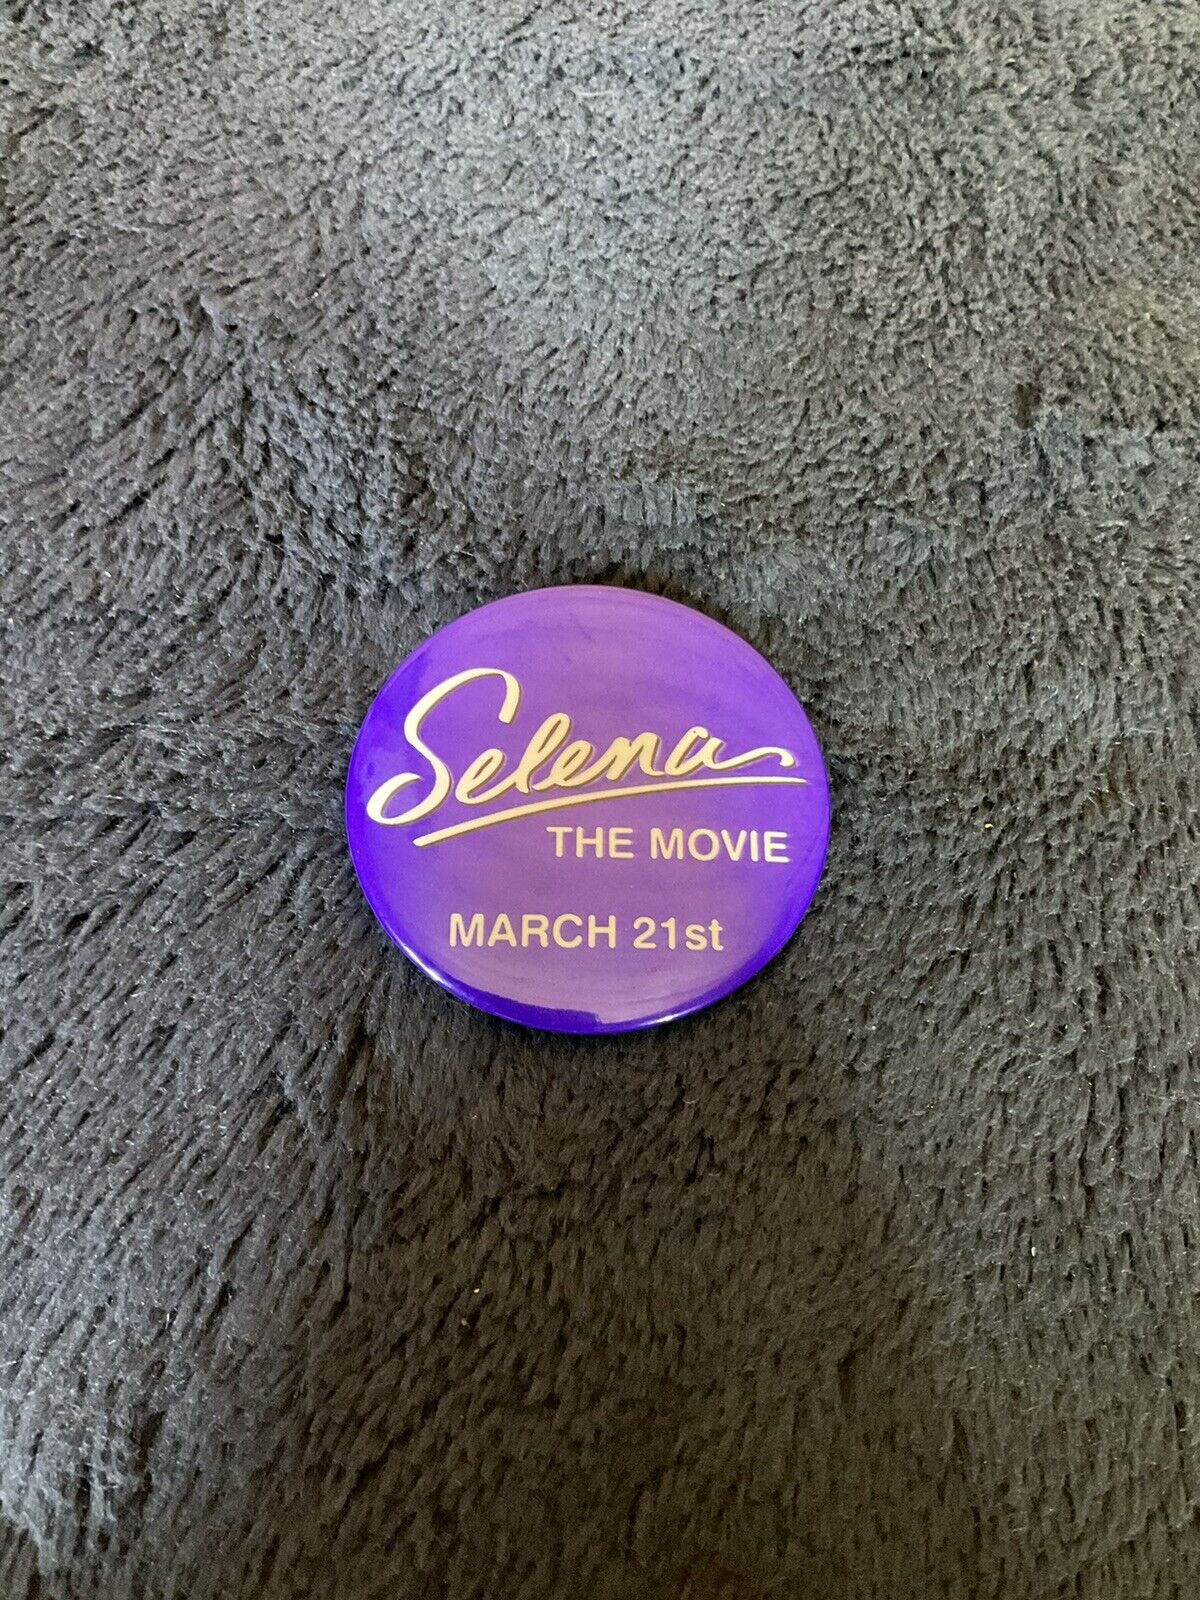 Selena Quintanilla Vintage Promotional Movie Merchandise Pinback Button Rare